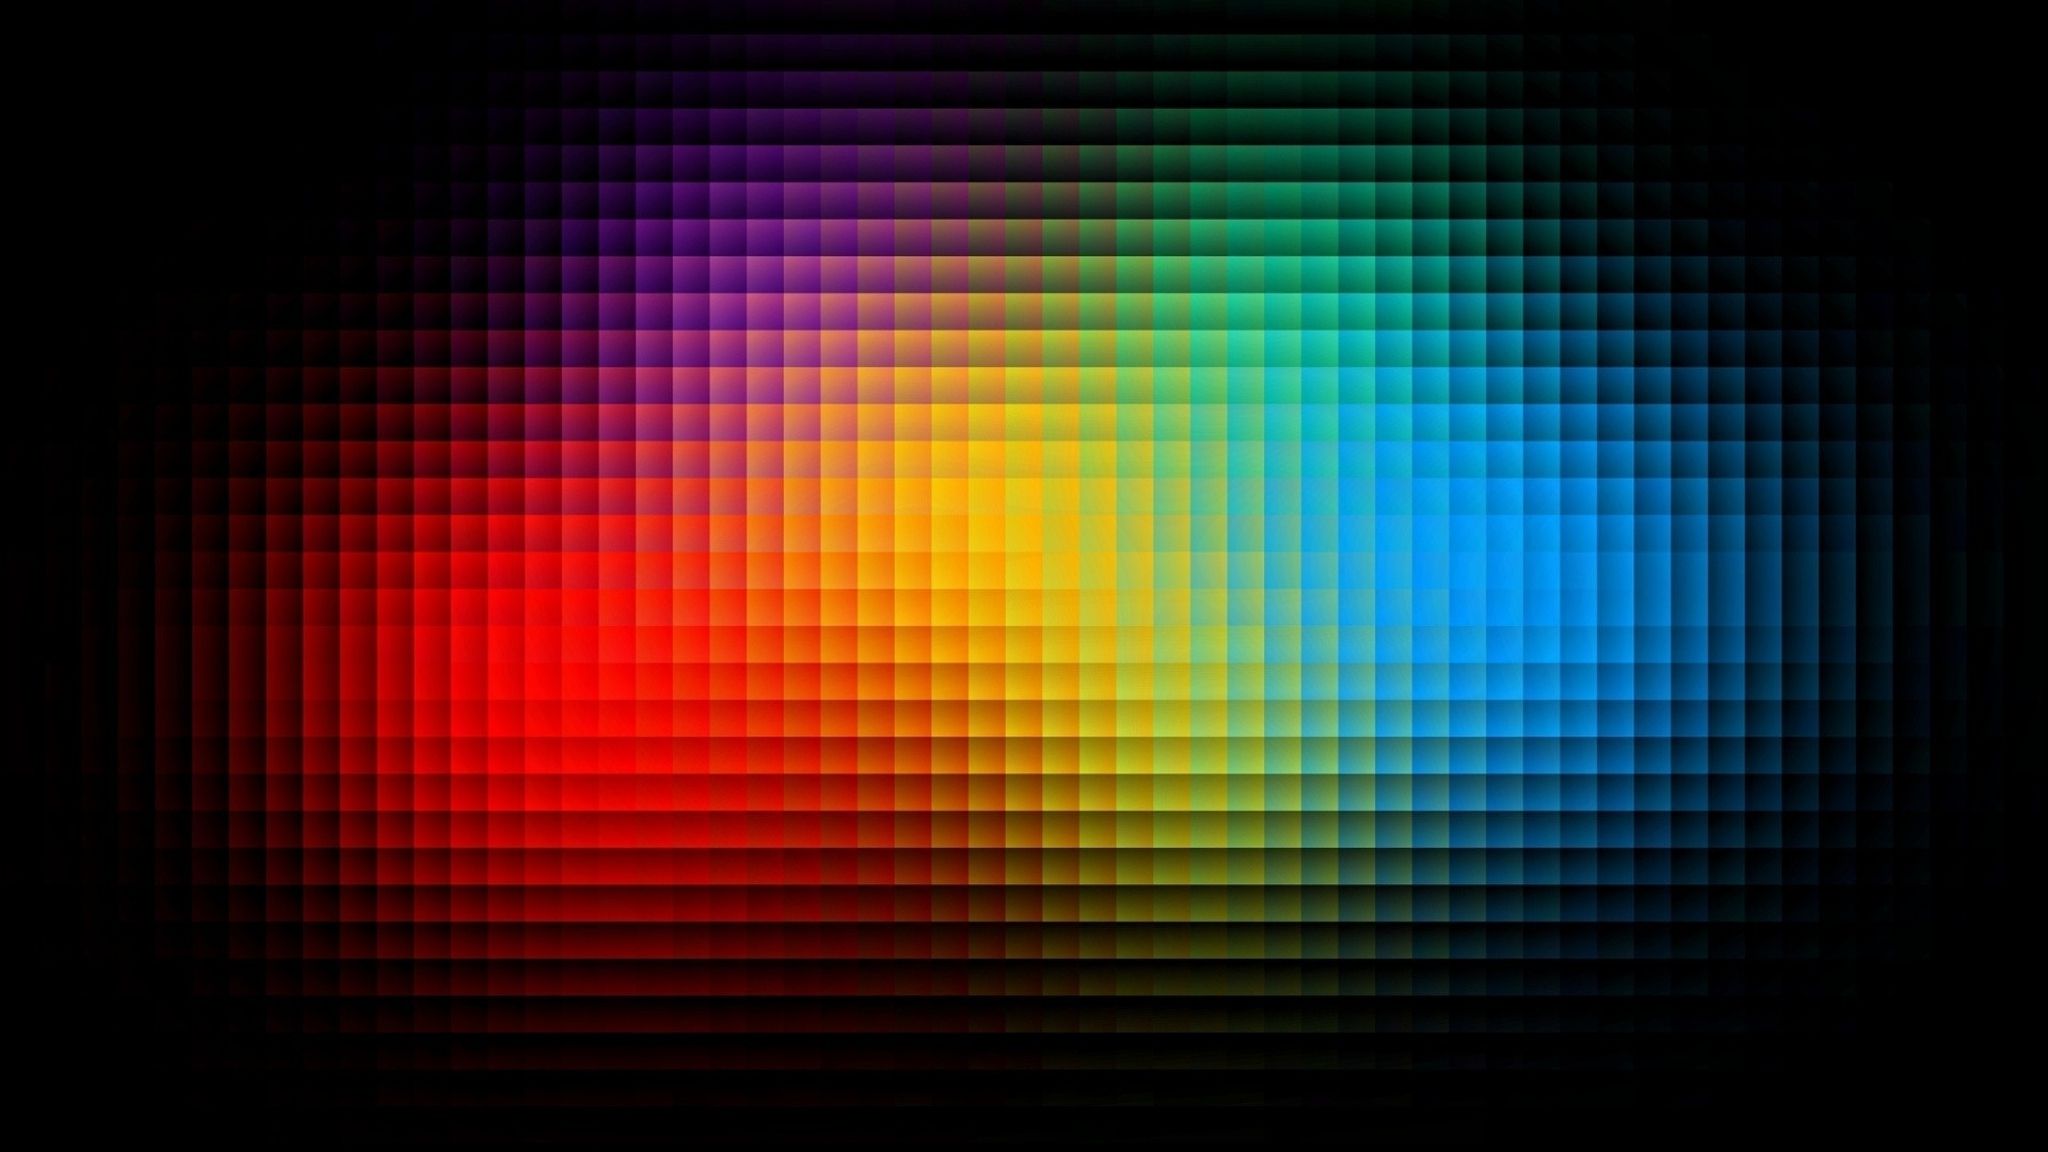 Solavei Image 2048 X 1152 Pixels For Wallpaper Desktop HD Wallpaper